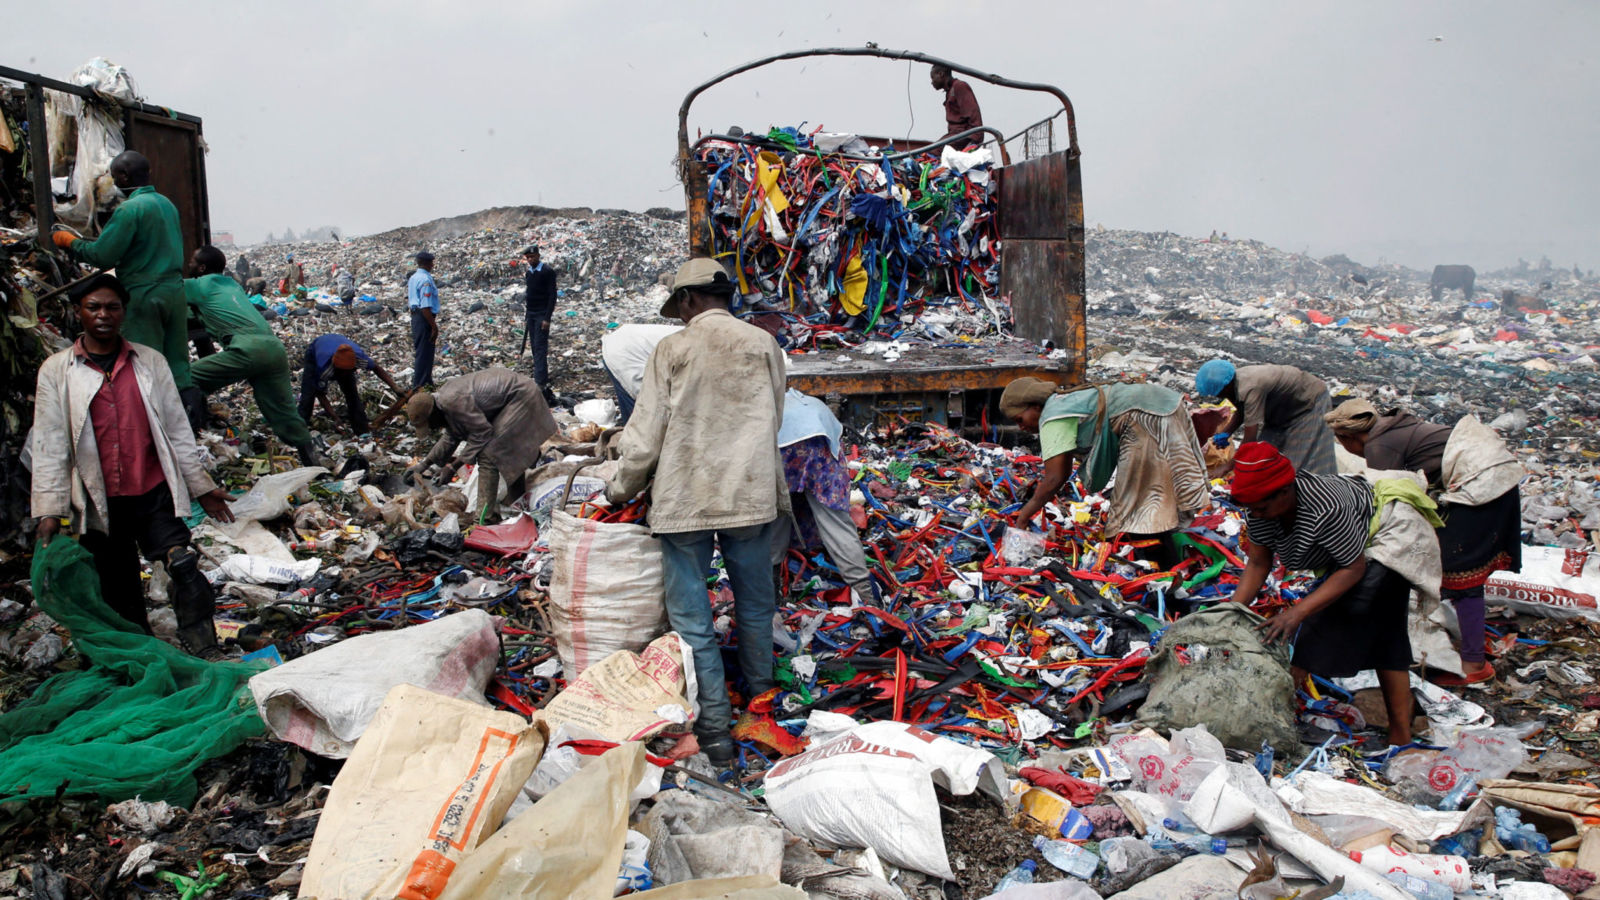 Kenya, in bid to crackdown on pollution,  passes world's toughest plastic bag law